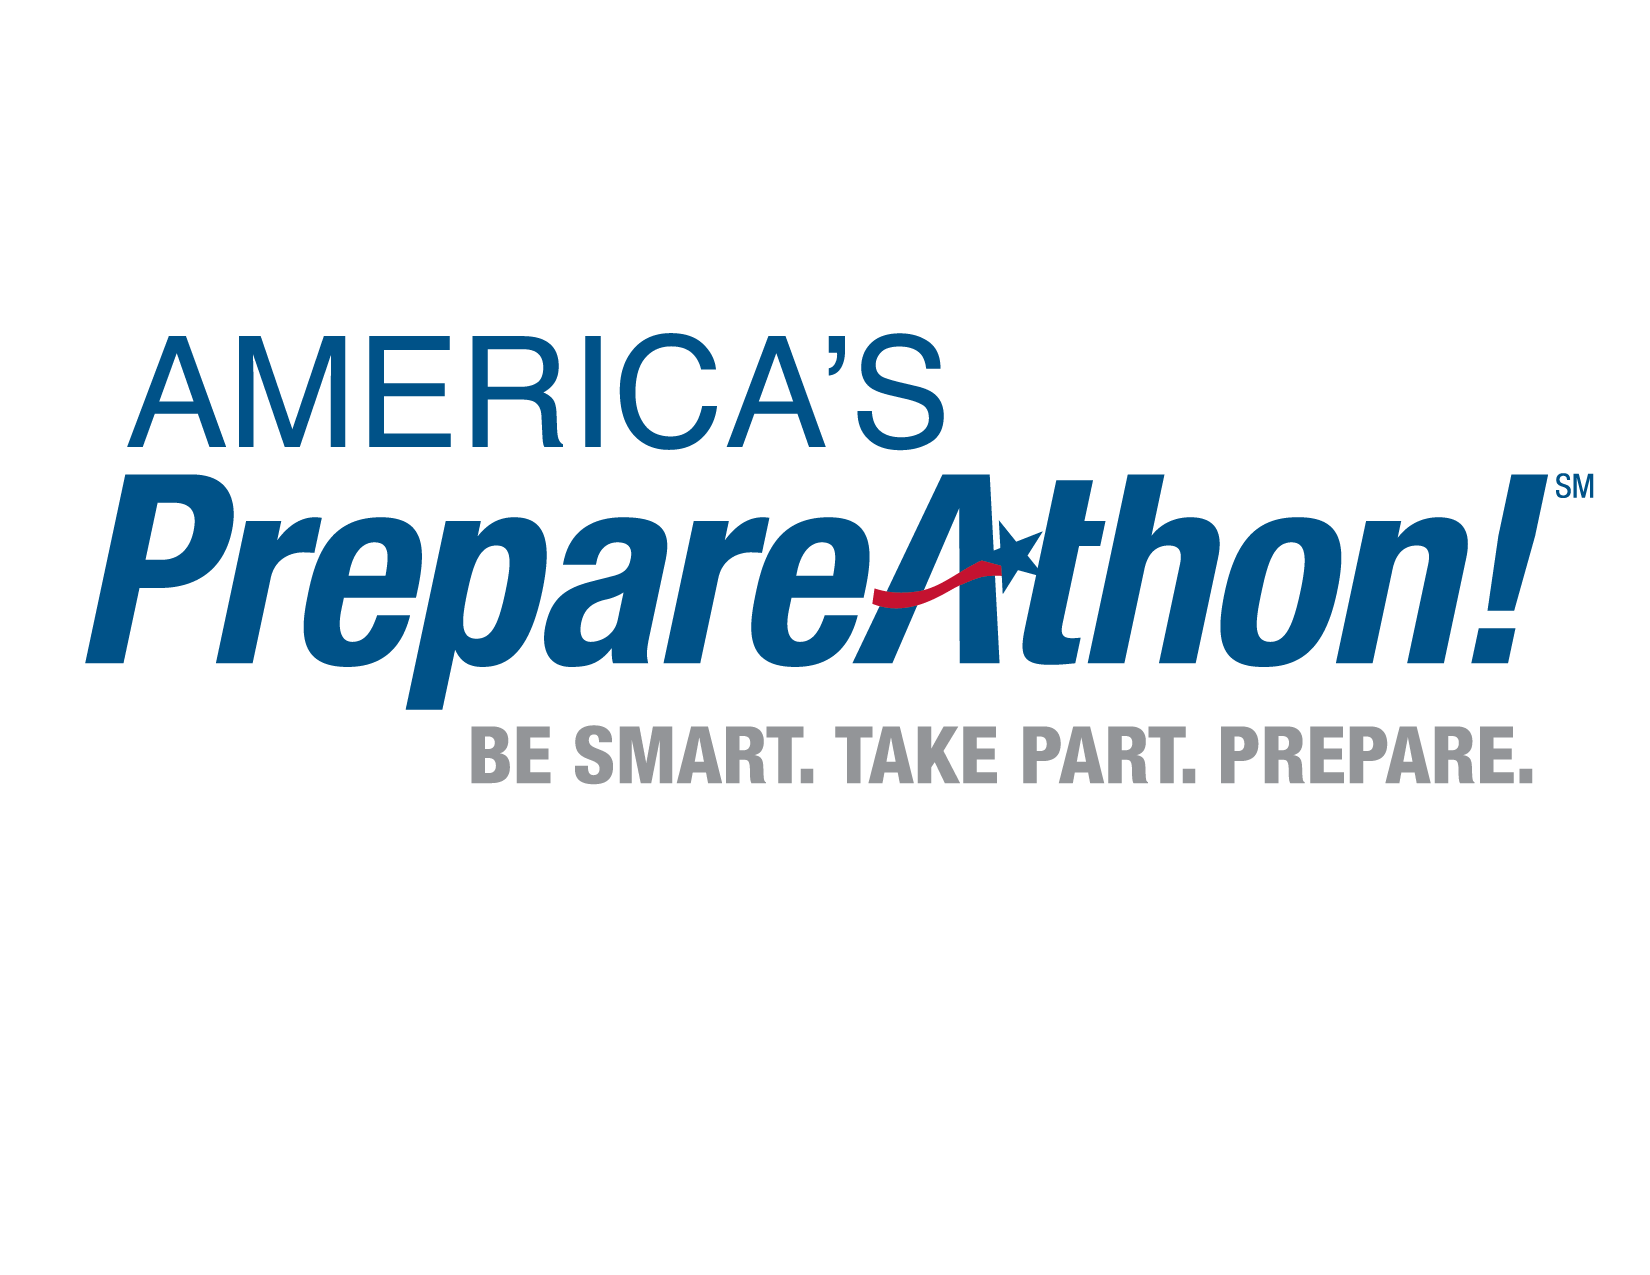 America's PrepareAthon be smart, take part, prepare